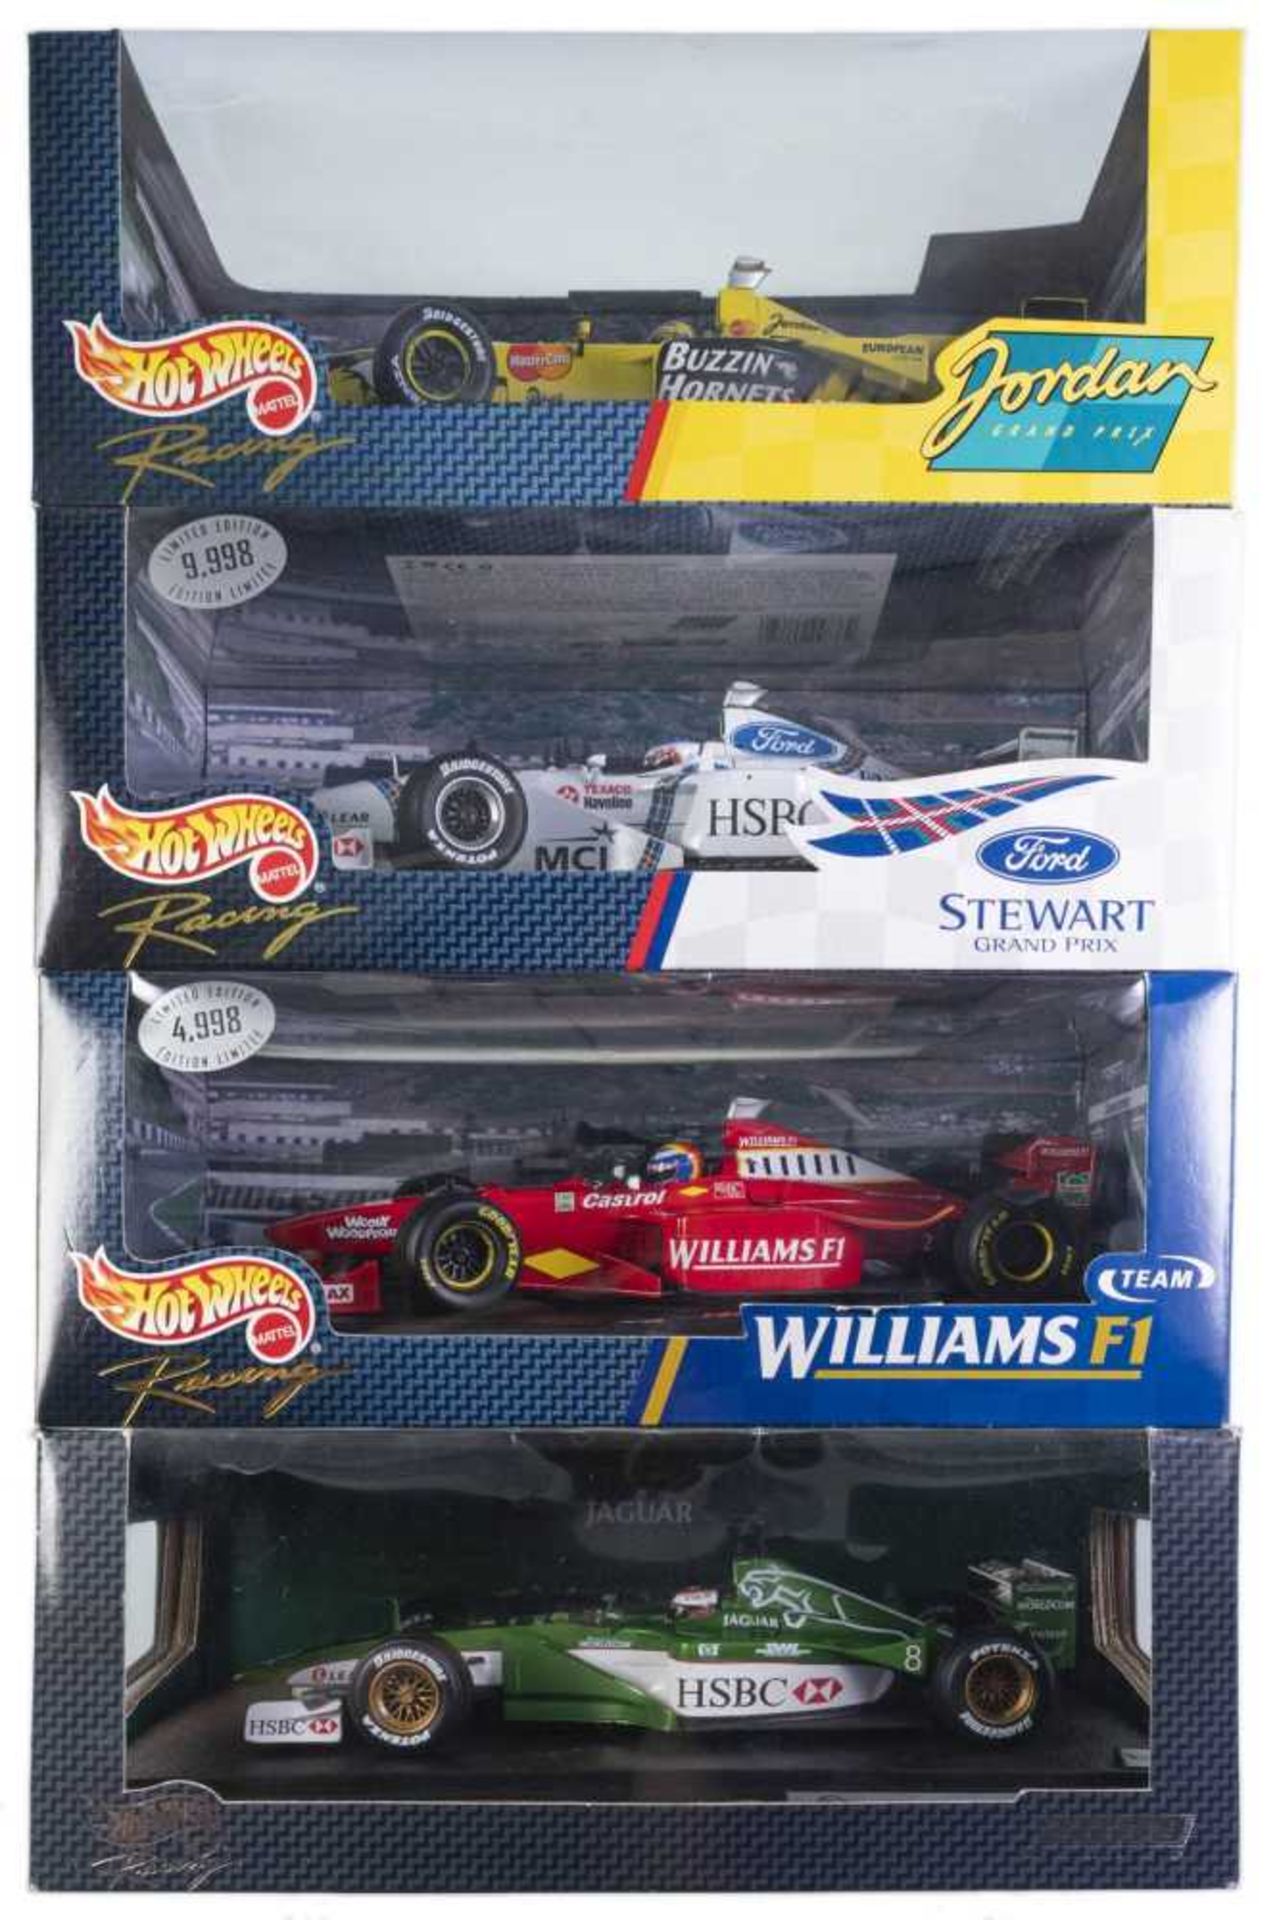 5 various models with WILLIAMS FW 21 R. Schumacher, JORDAN 199 H. H. Frentzen, STEWART SF2 R. Barric